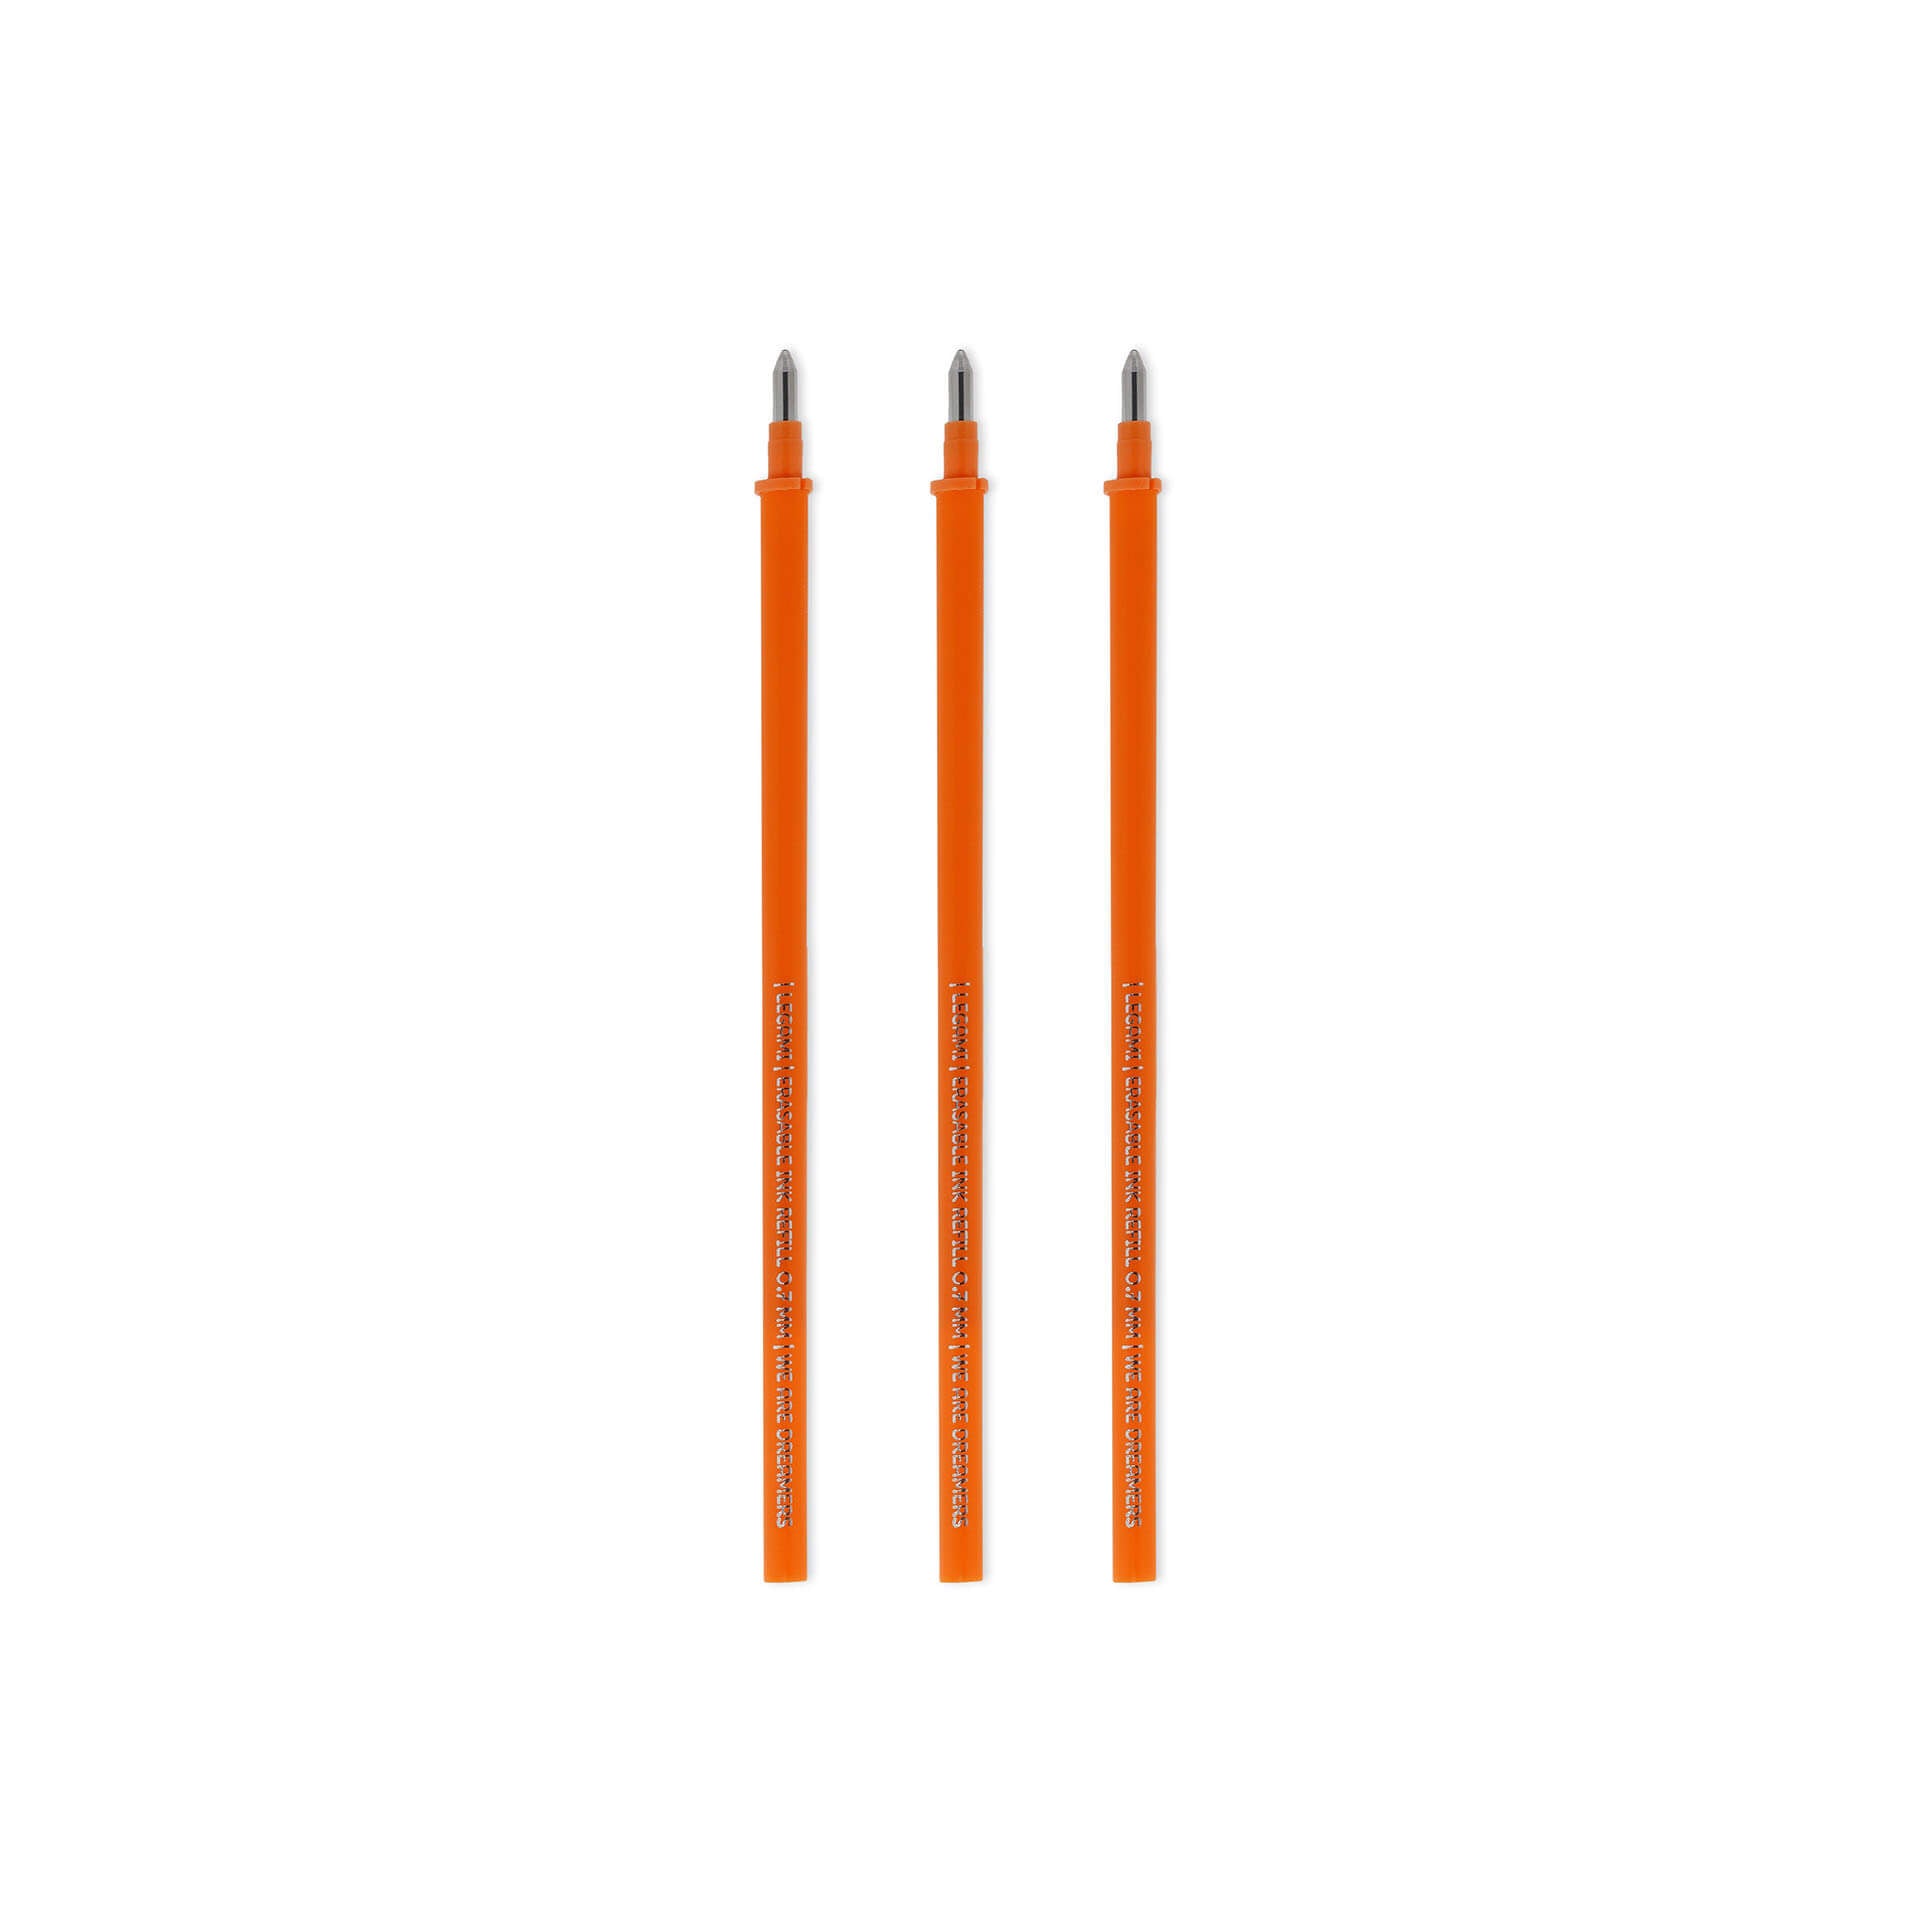 3 Orange Legami Erasable Pen Refills without packaging